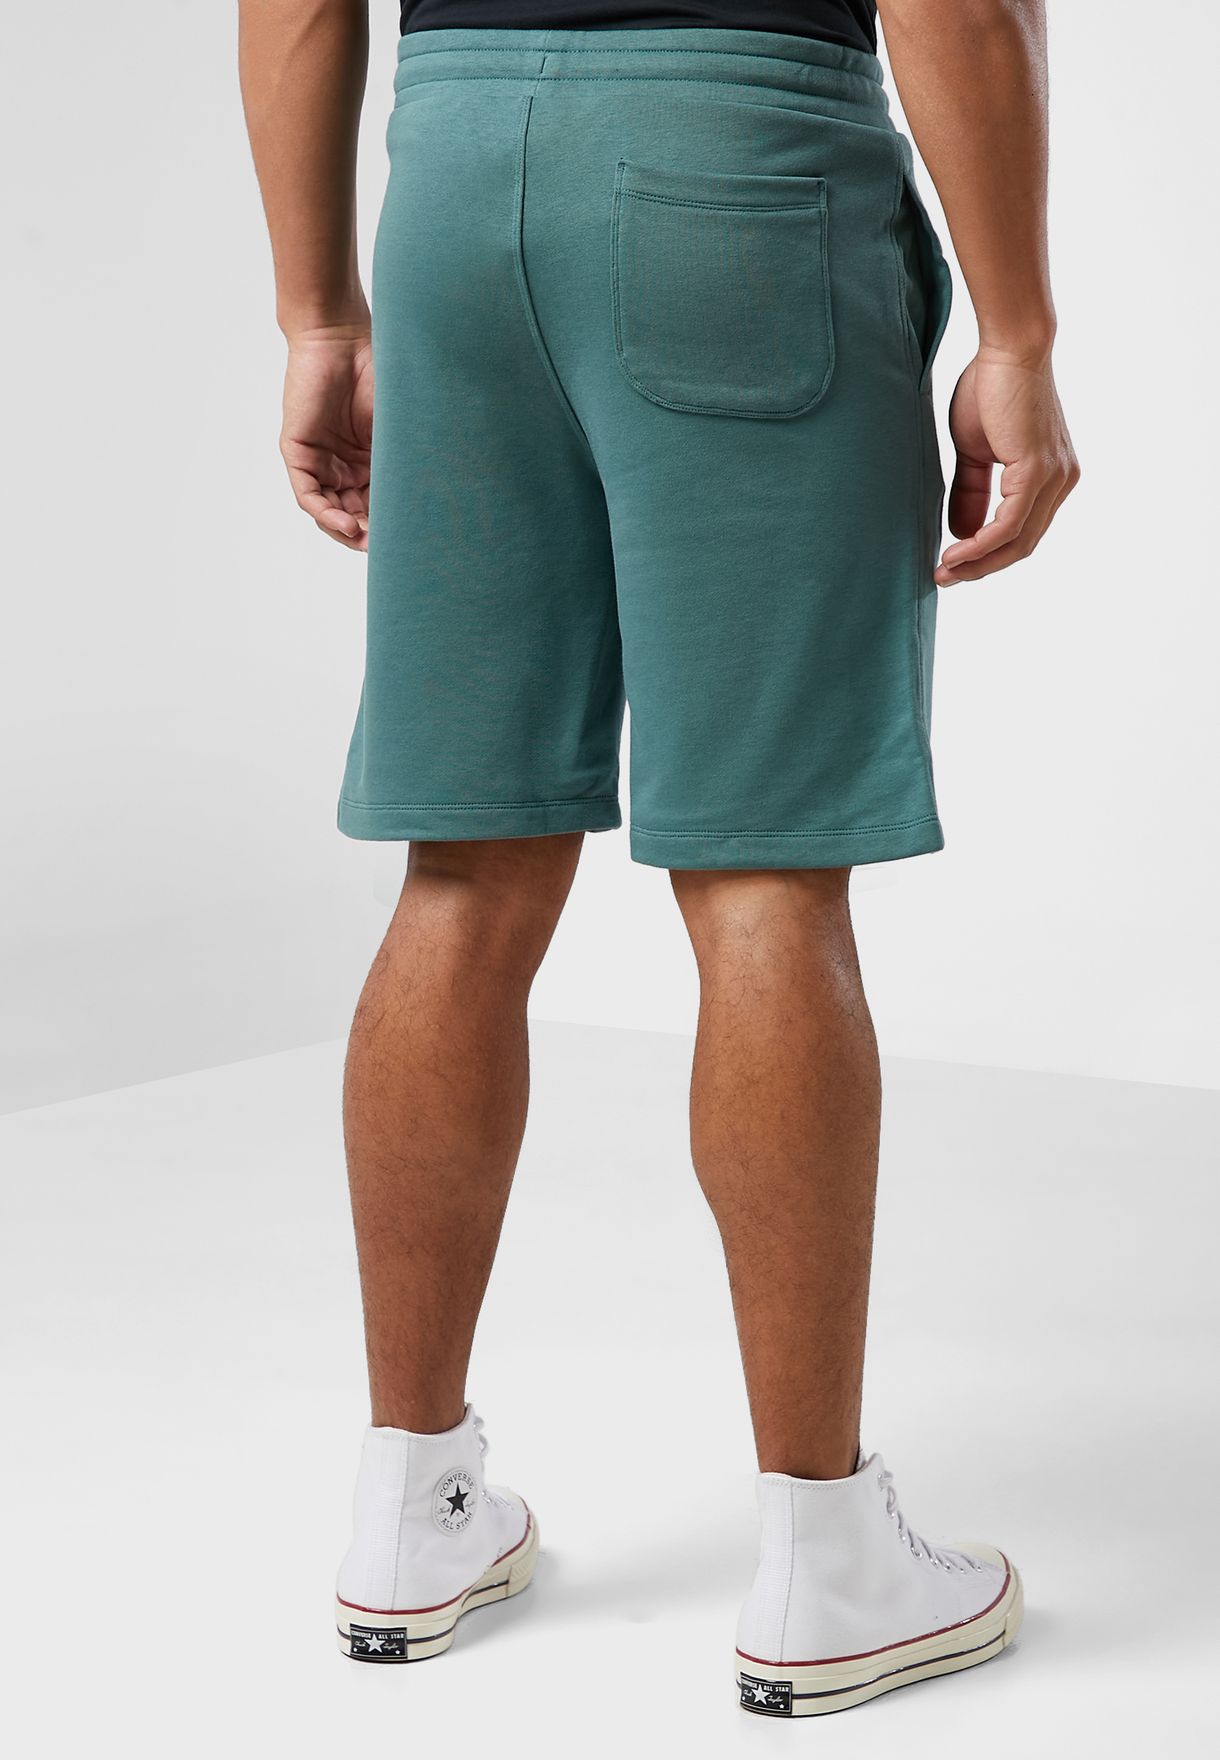 Star Chevron Shorts